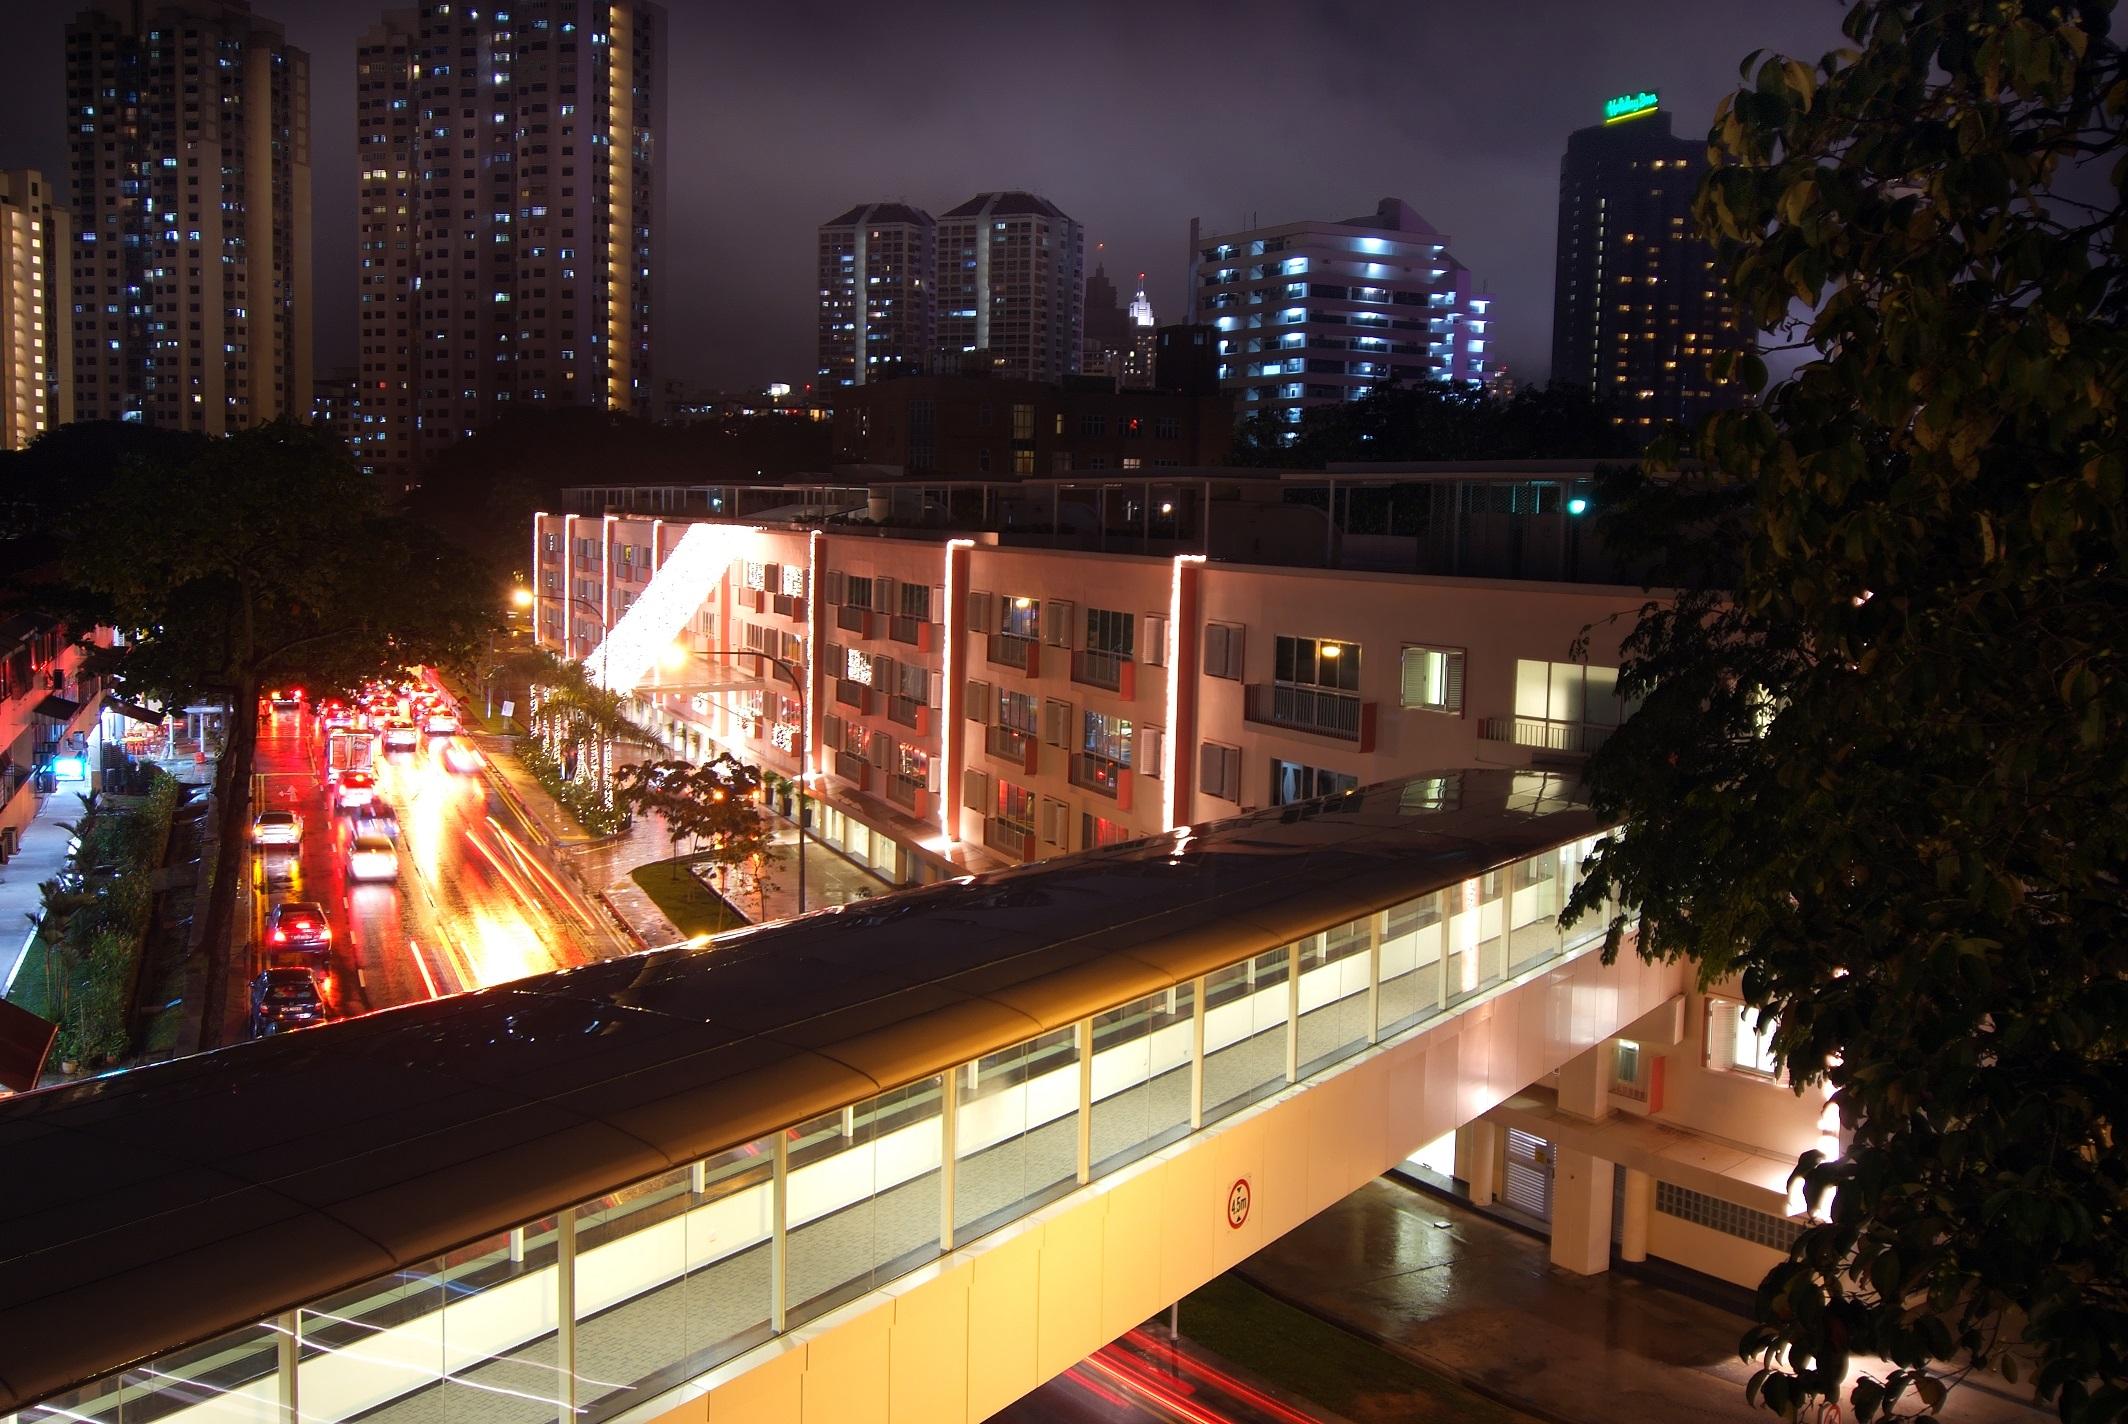 Link Hotel Сингапур Экстерьер фото